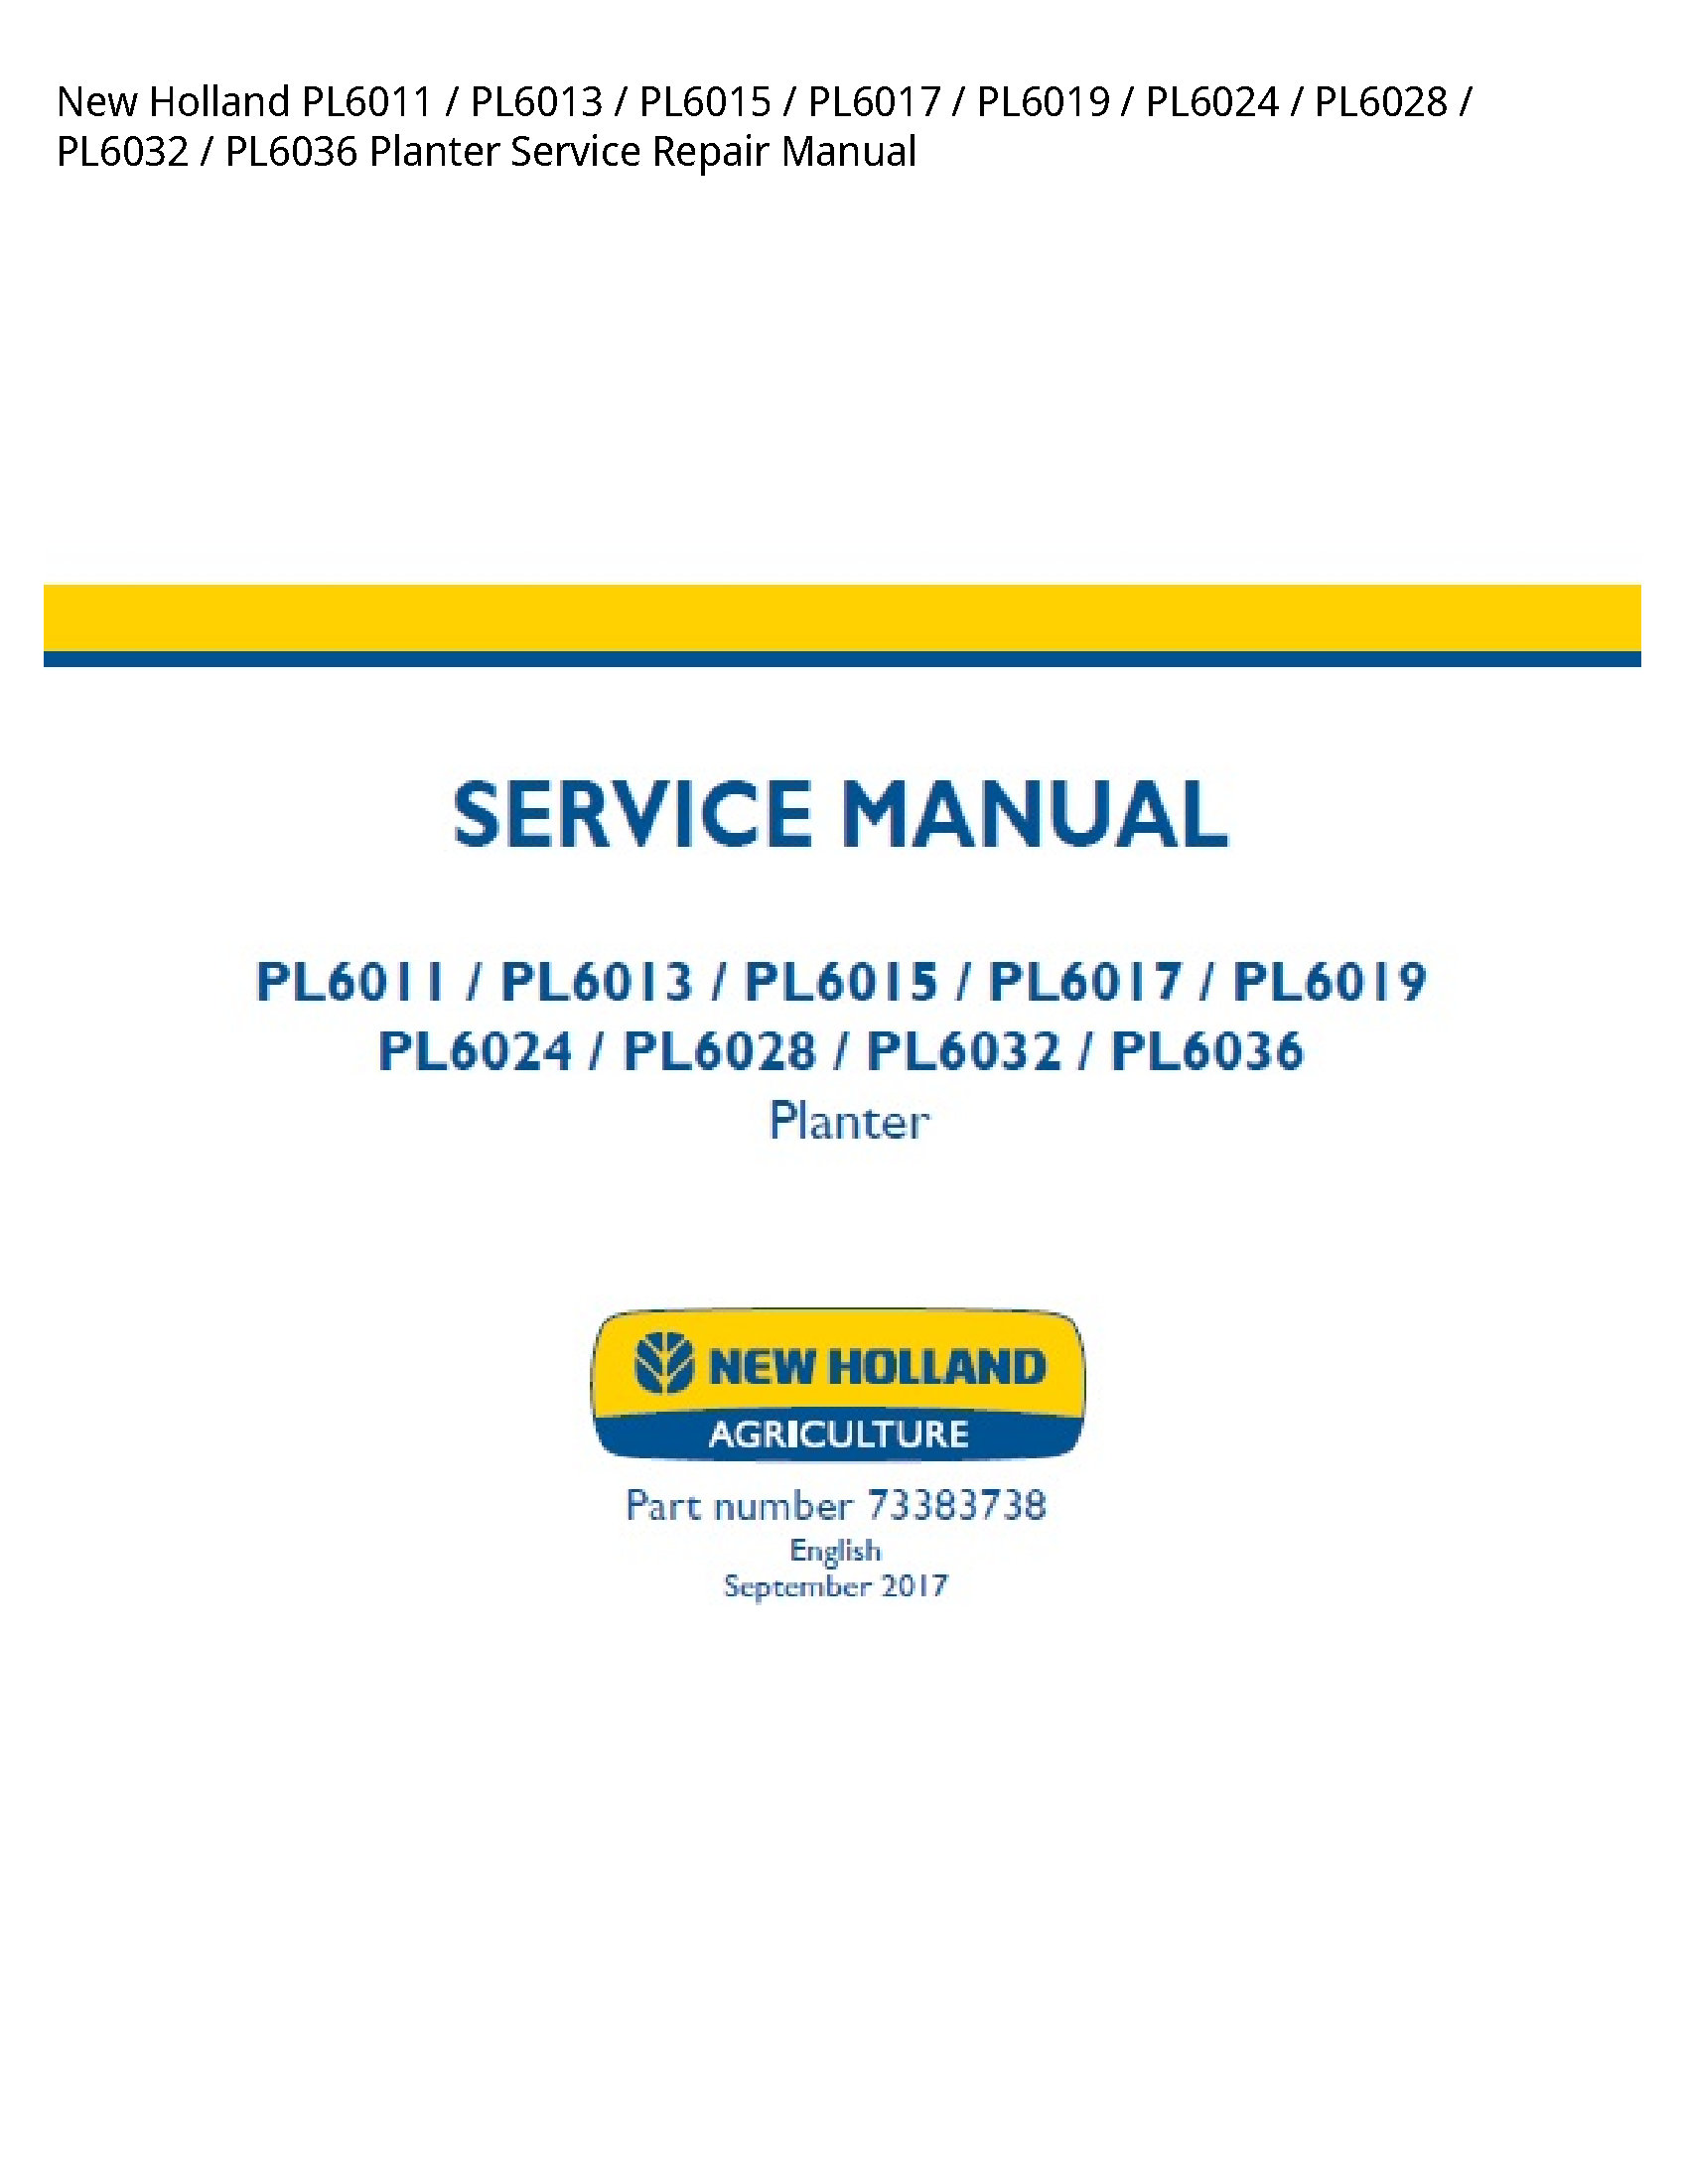 New Holland PL6011 Planter manual